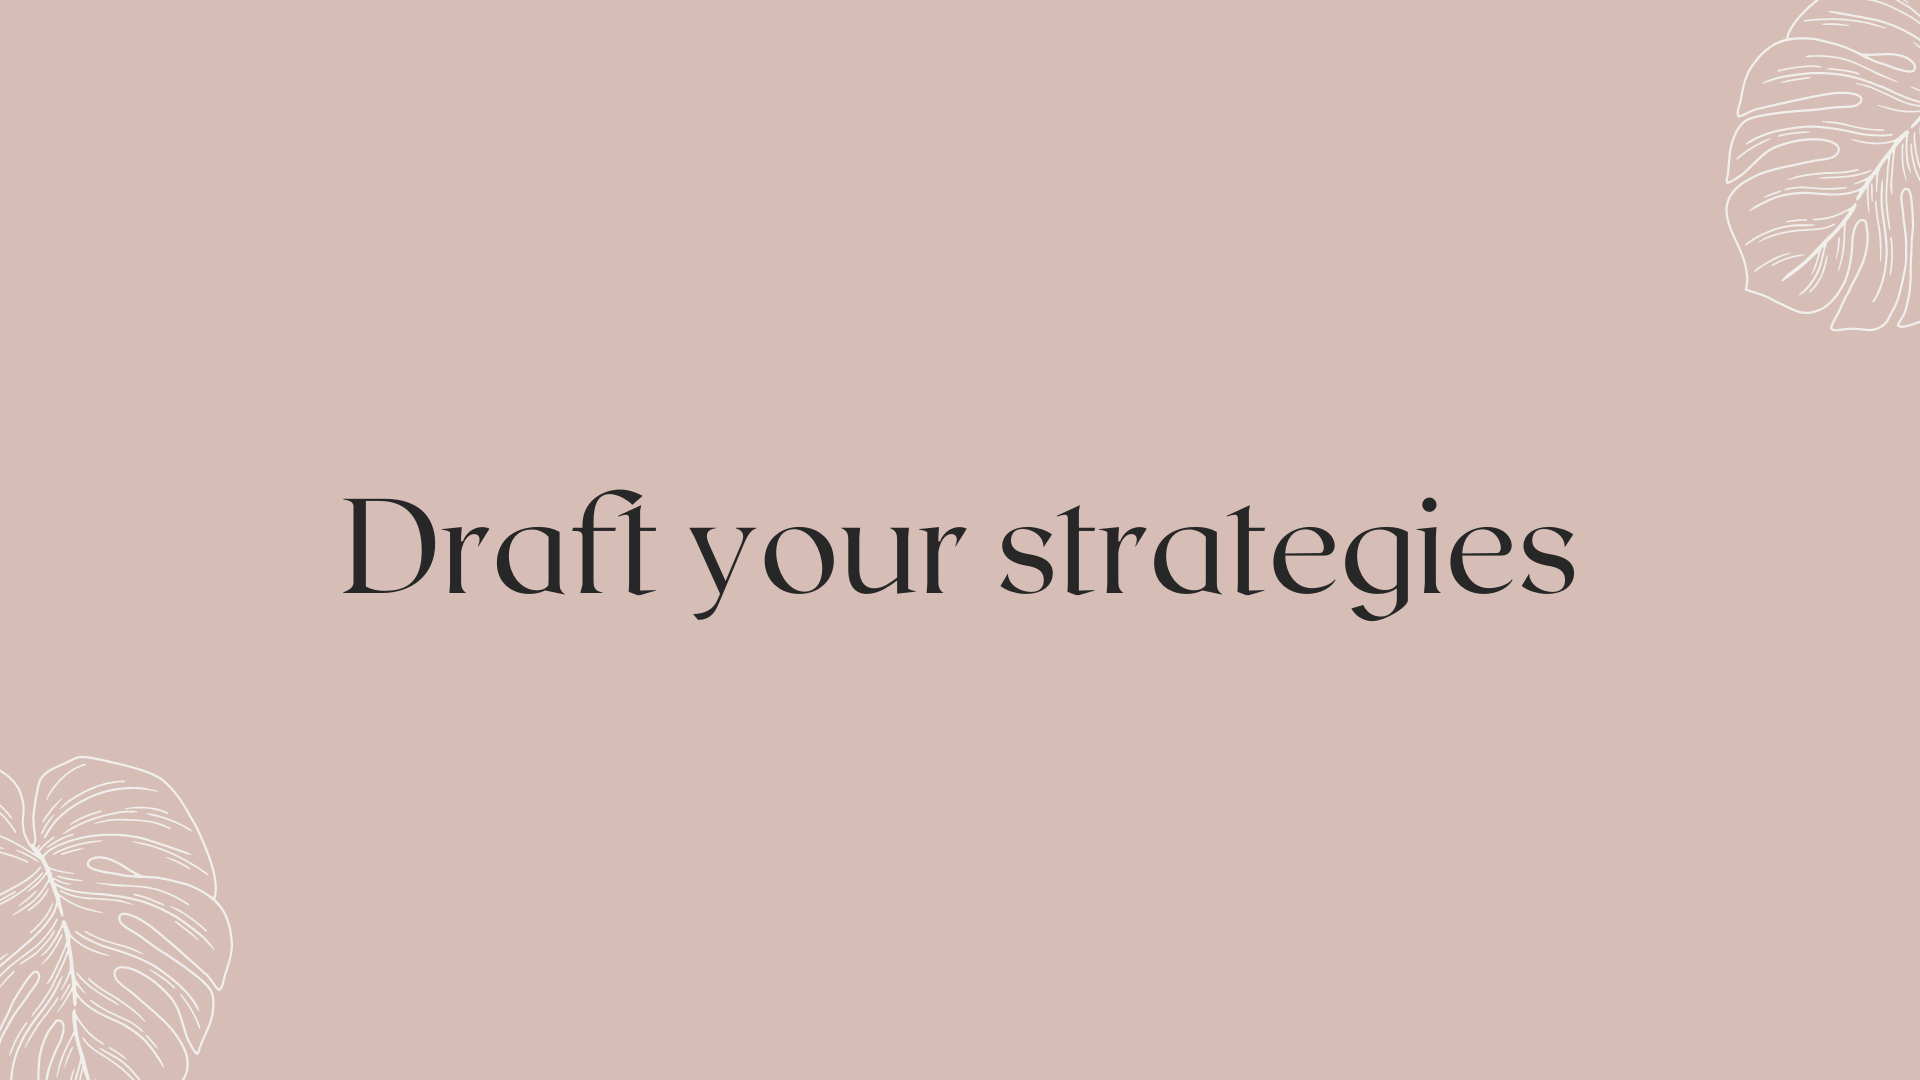 Draft your strategies